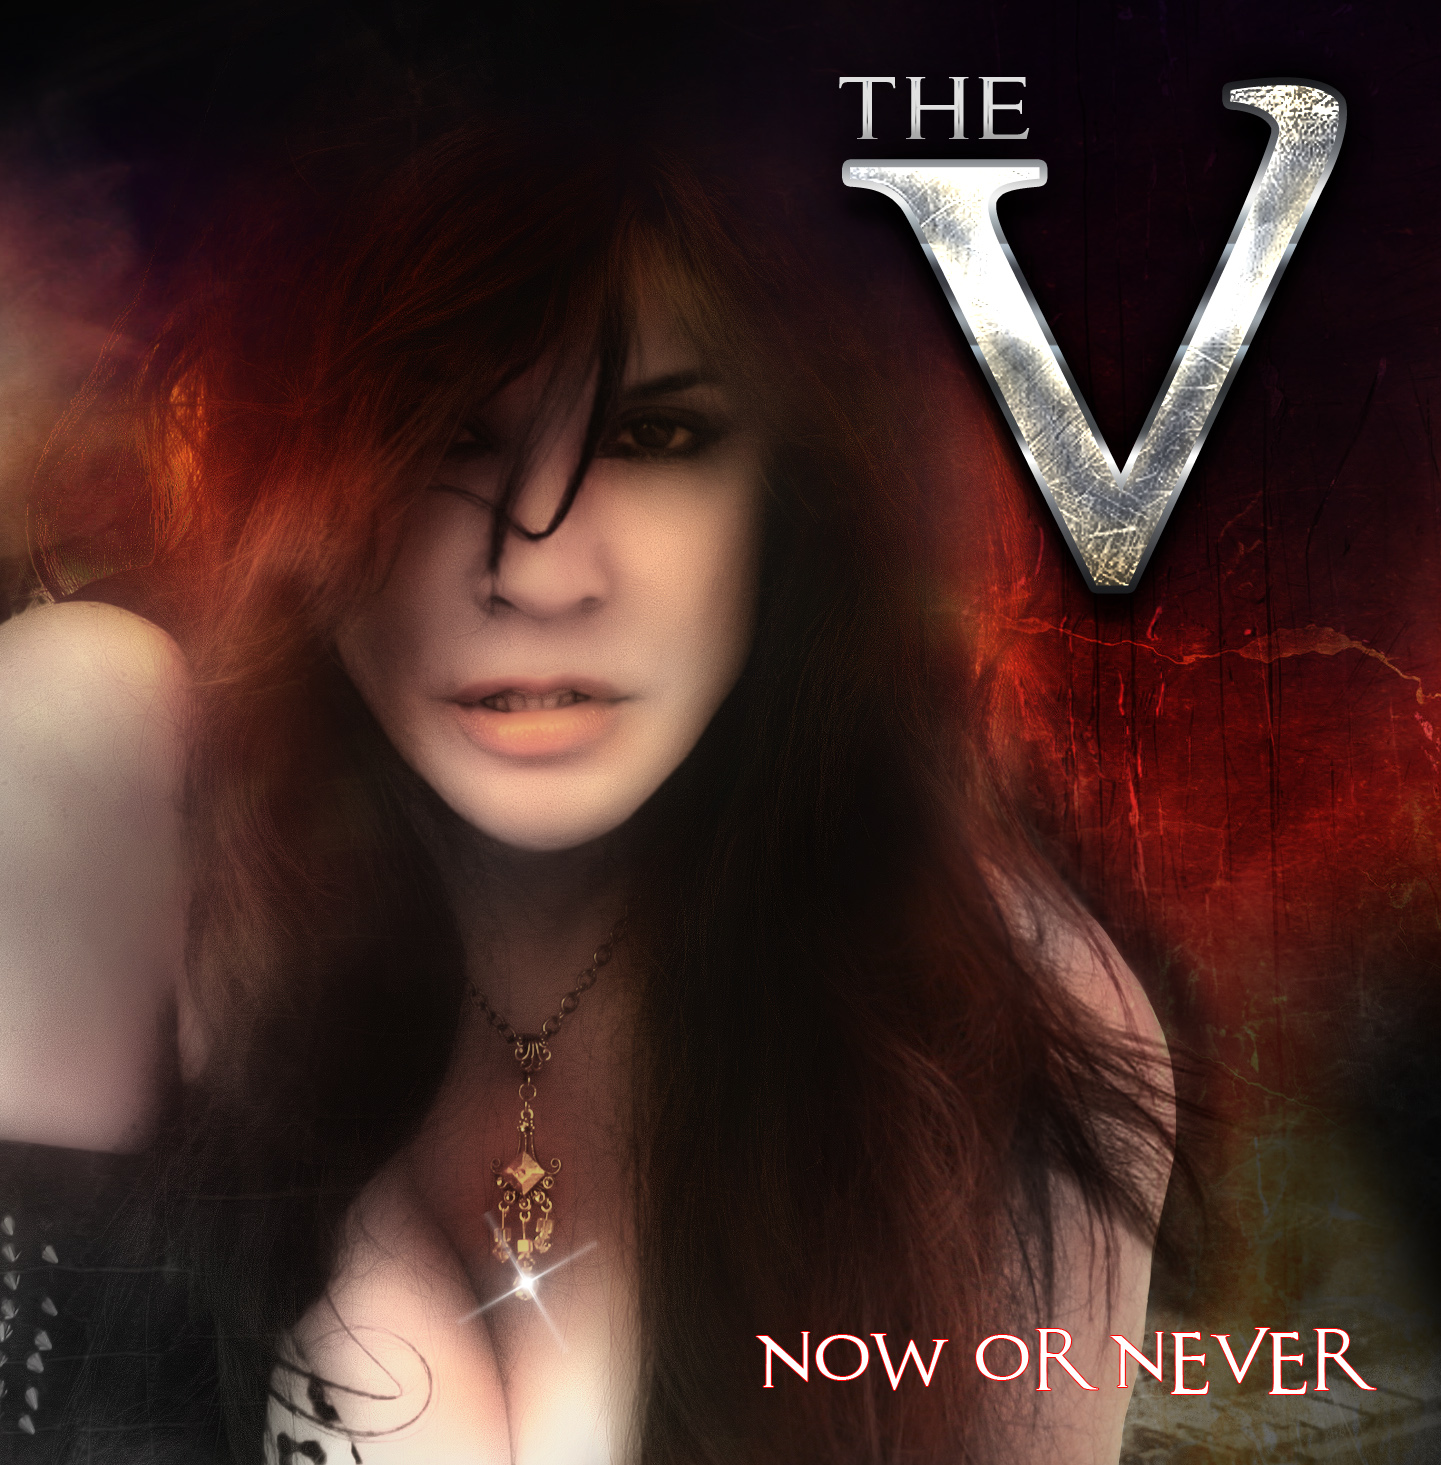 THE V COVER